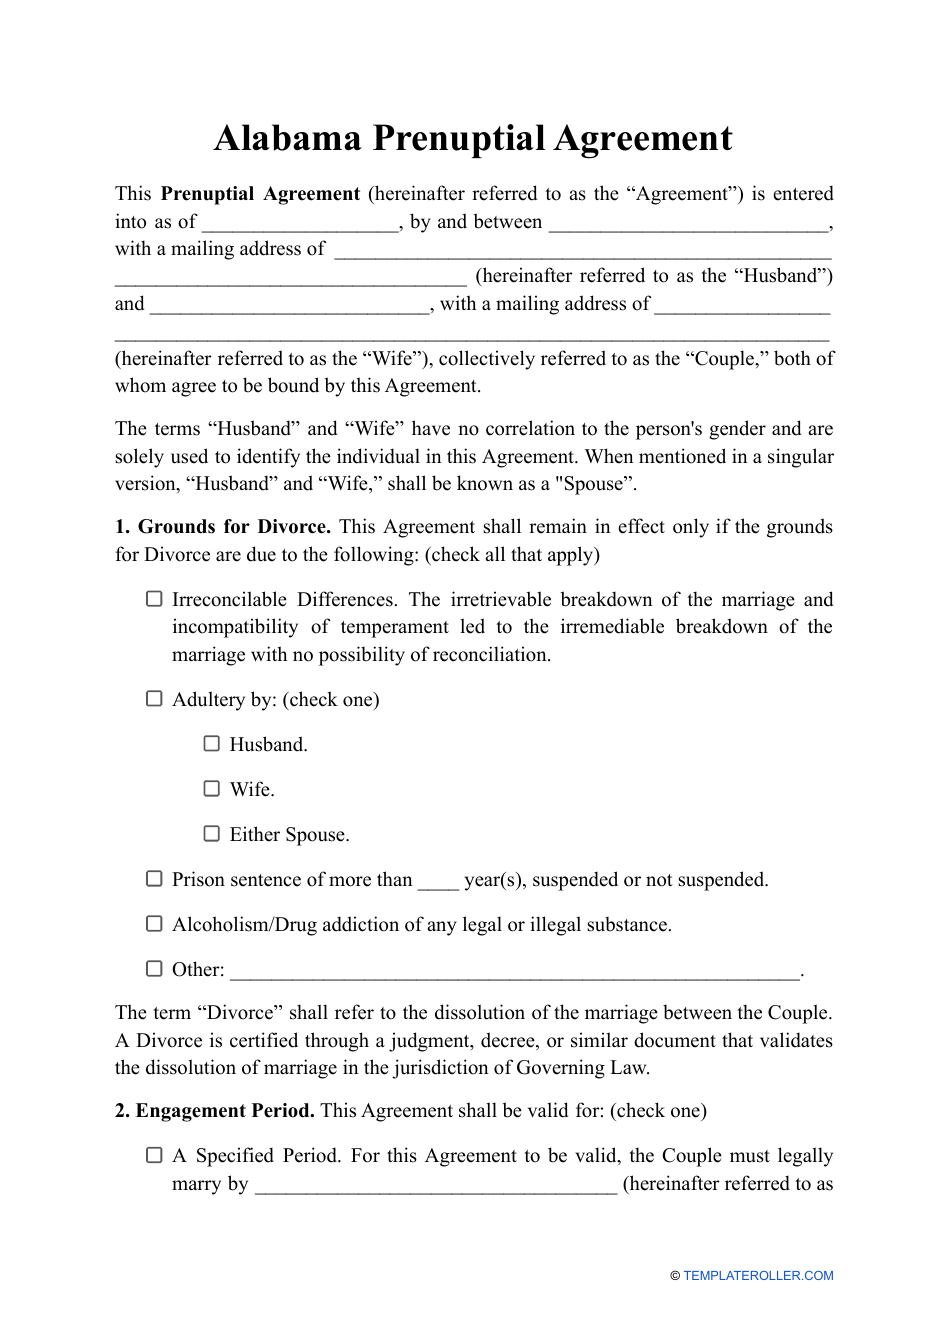 Prenuptial Agreement Template - Alabama, Page 1